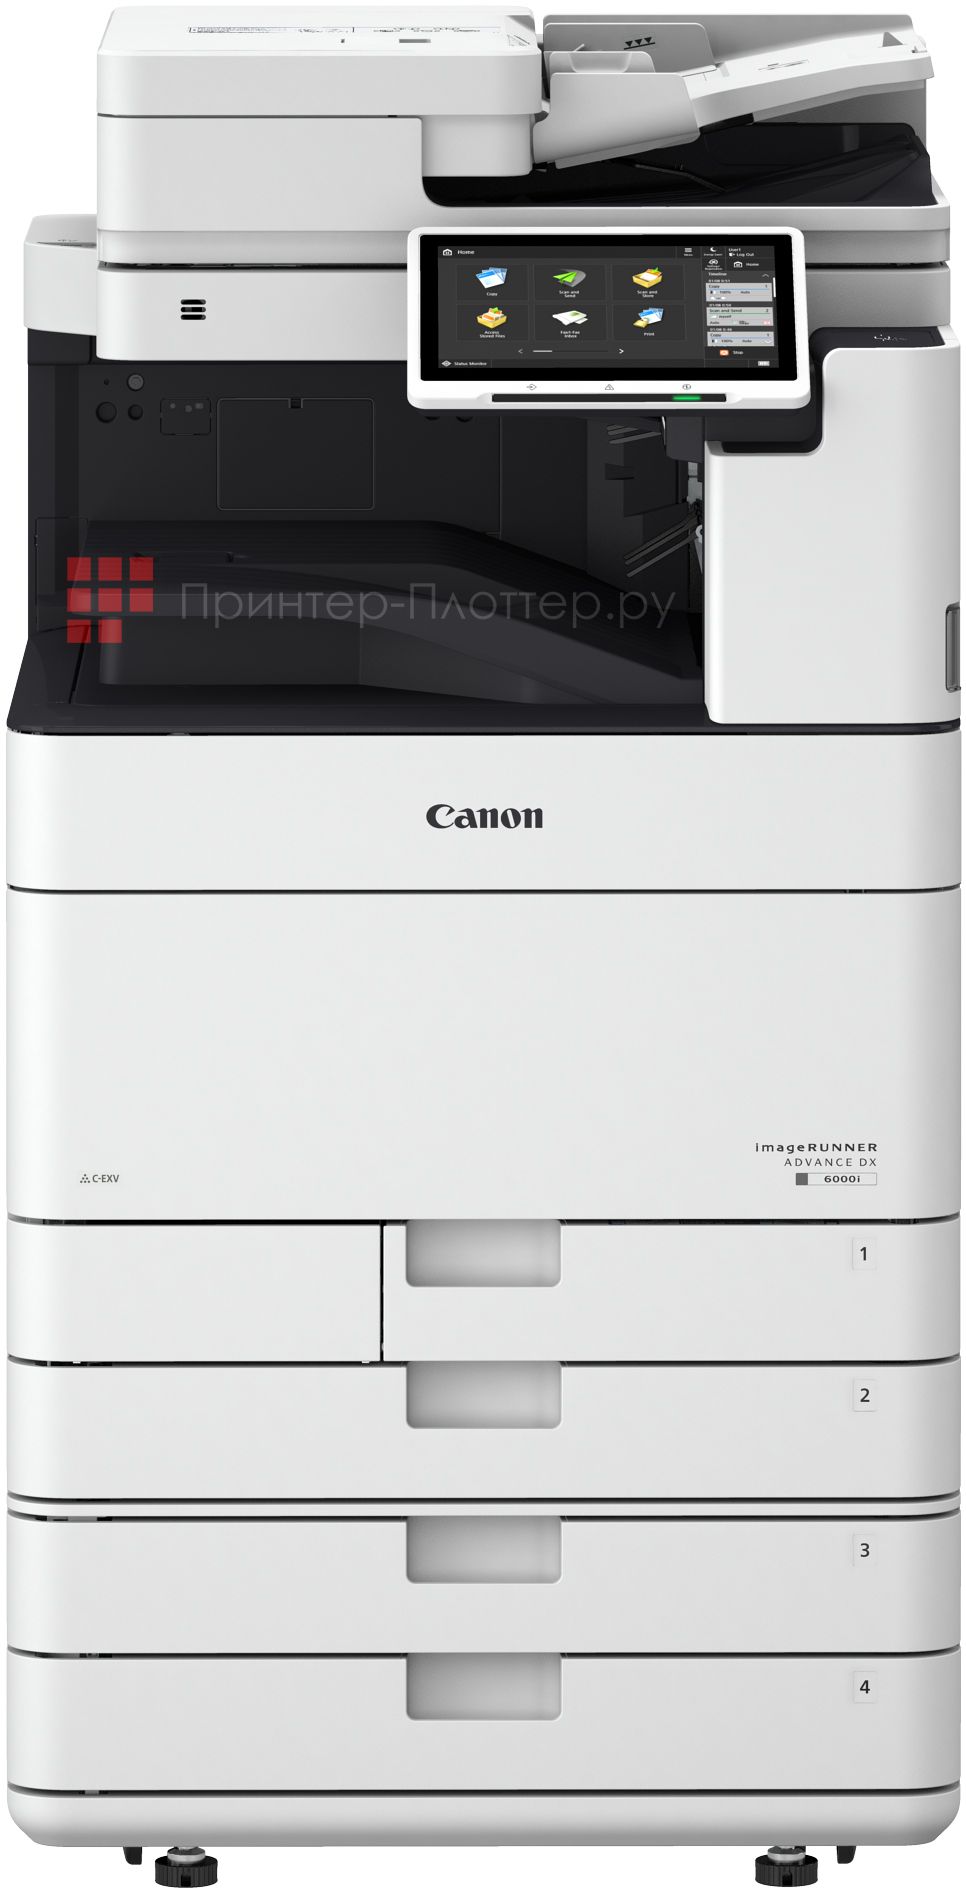 Каталог  Canon imageRUNNER ADVANCE DX 6000i от сервисного центра